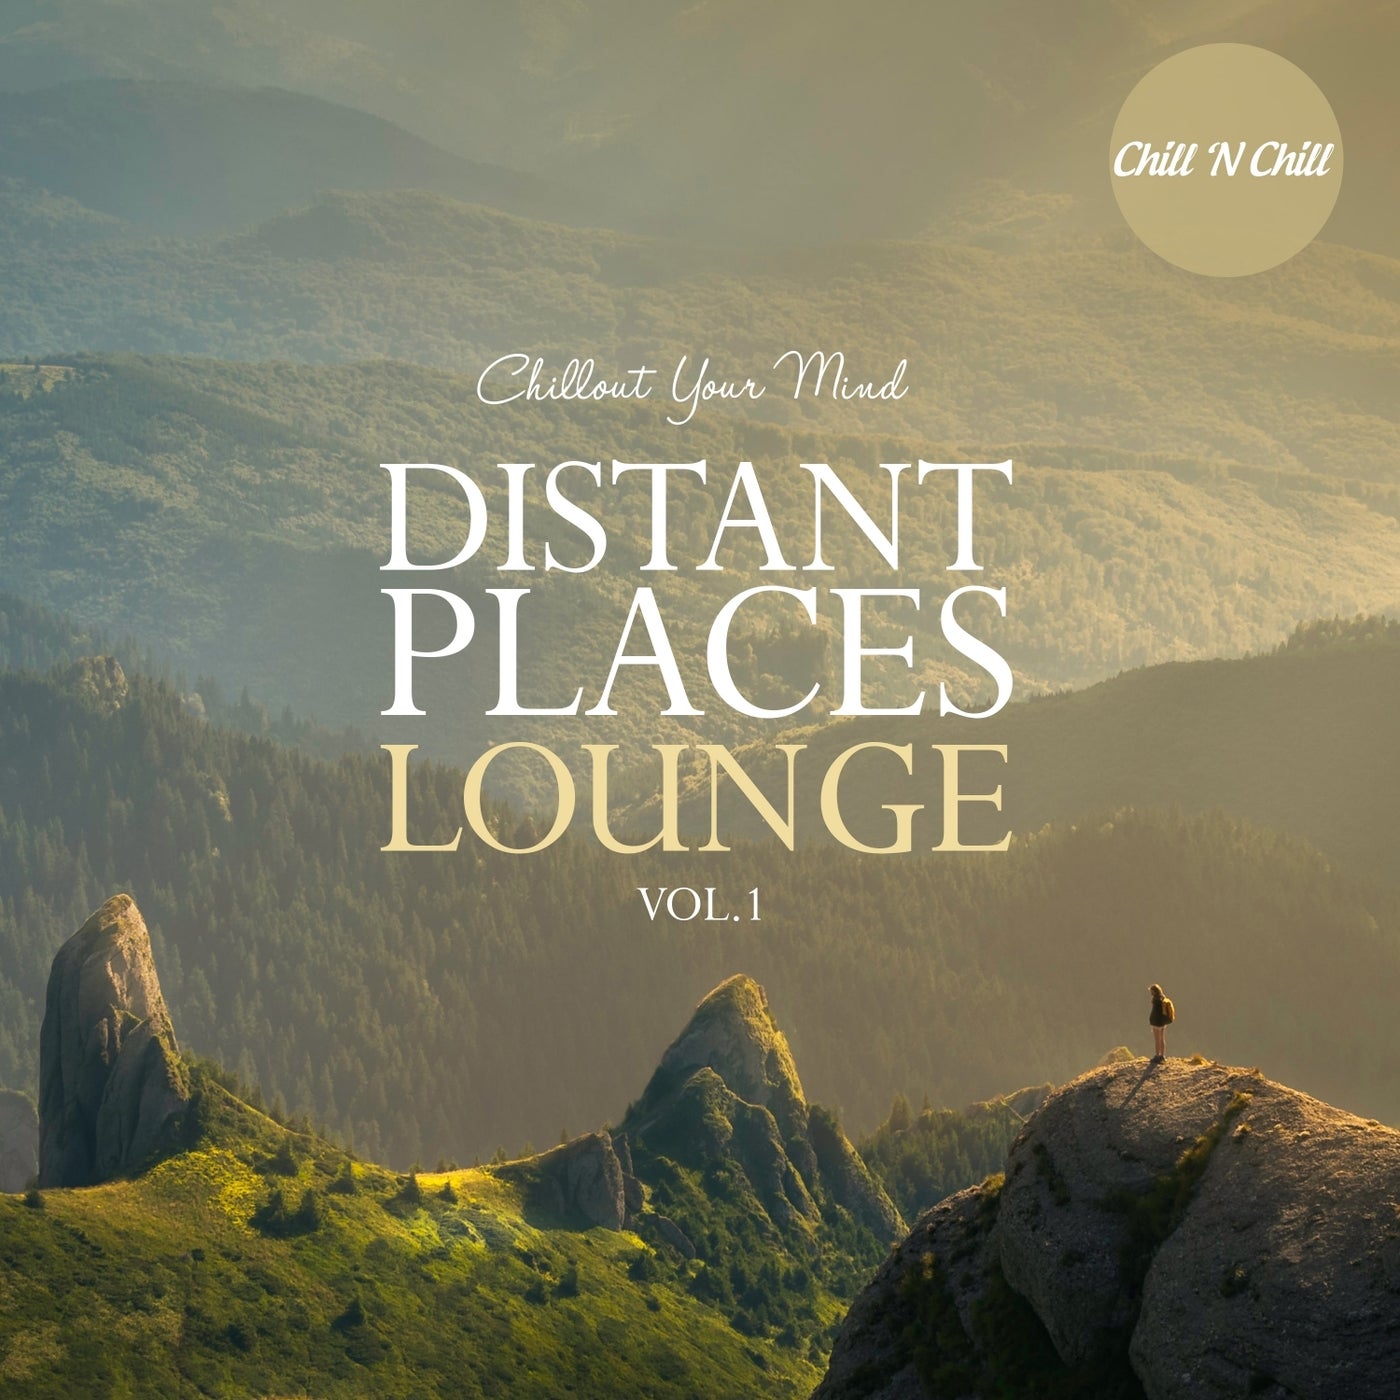 Distant Places Lounge, Vol. 1: Chillout Your Mind